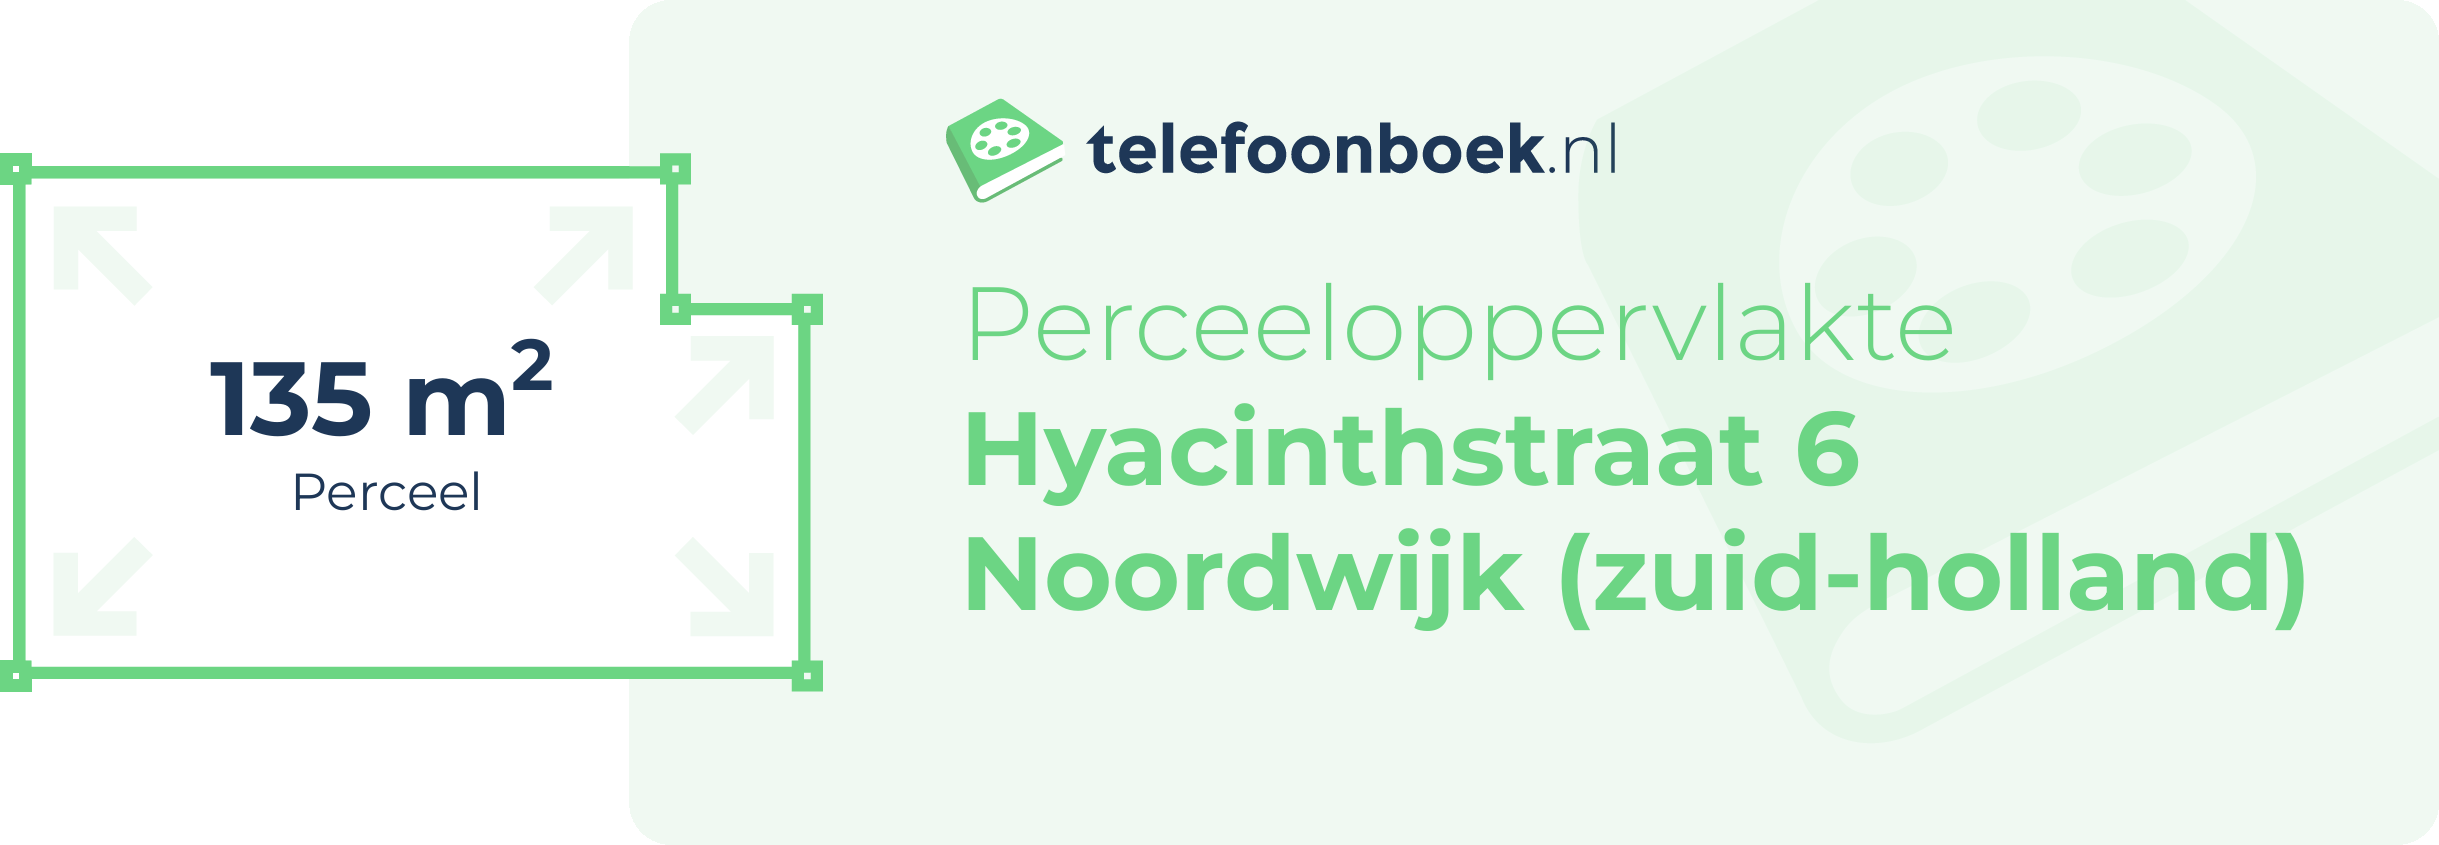 Perceeloppervlakte Hyacinthstraat 6 Noordwijk (Zuid-Holland)